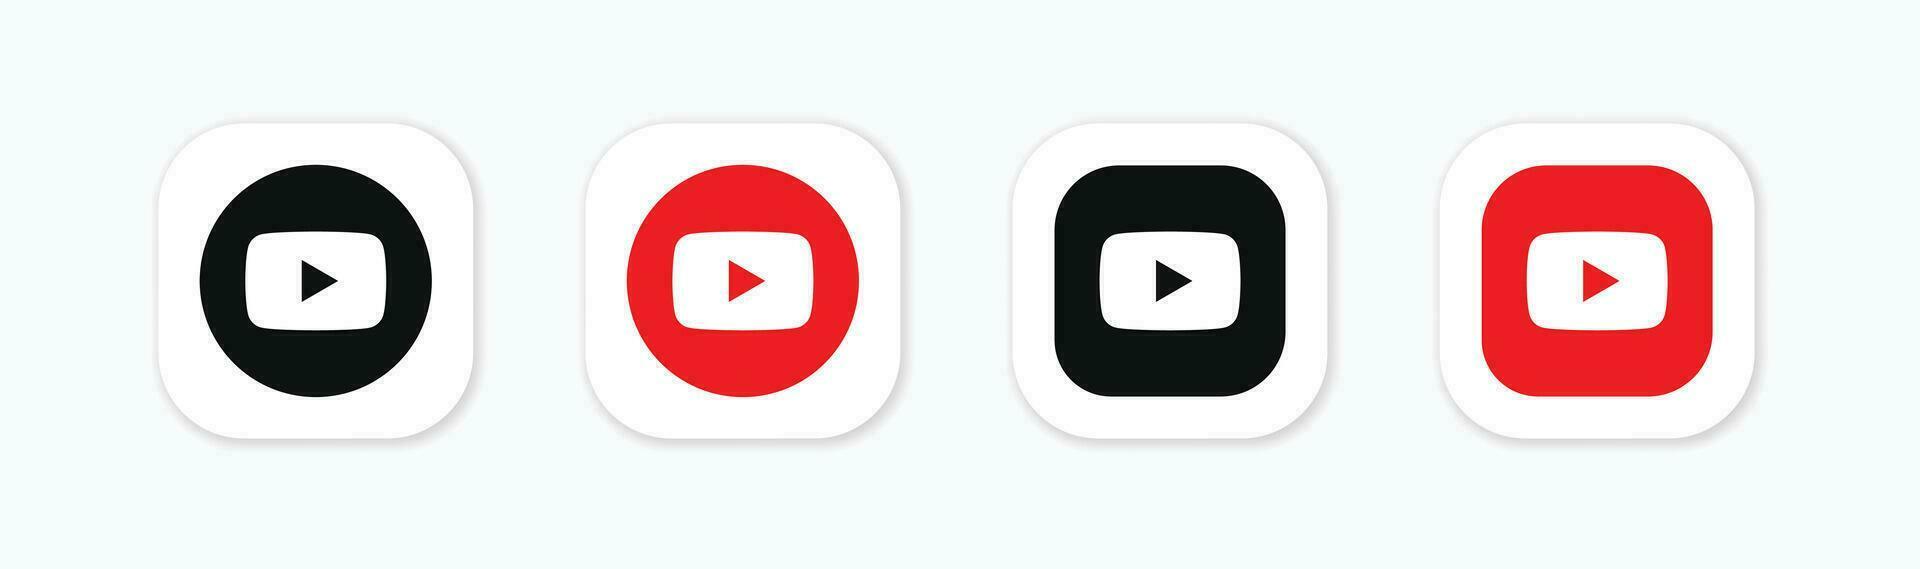 Youtube ikon. Youtube social media logotyp. vektor